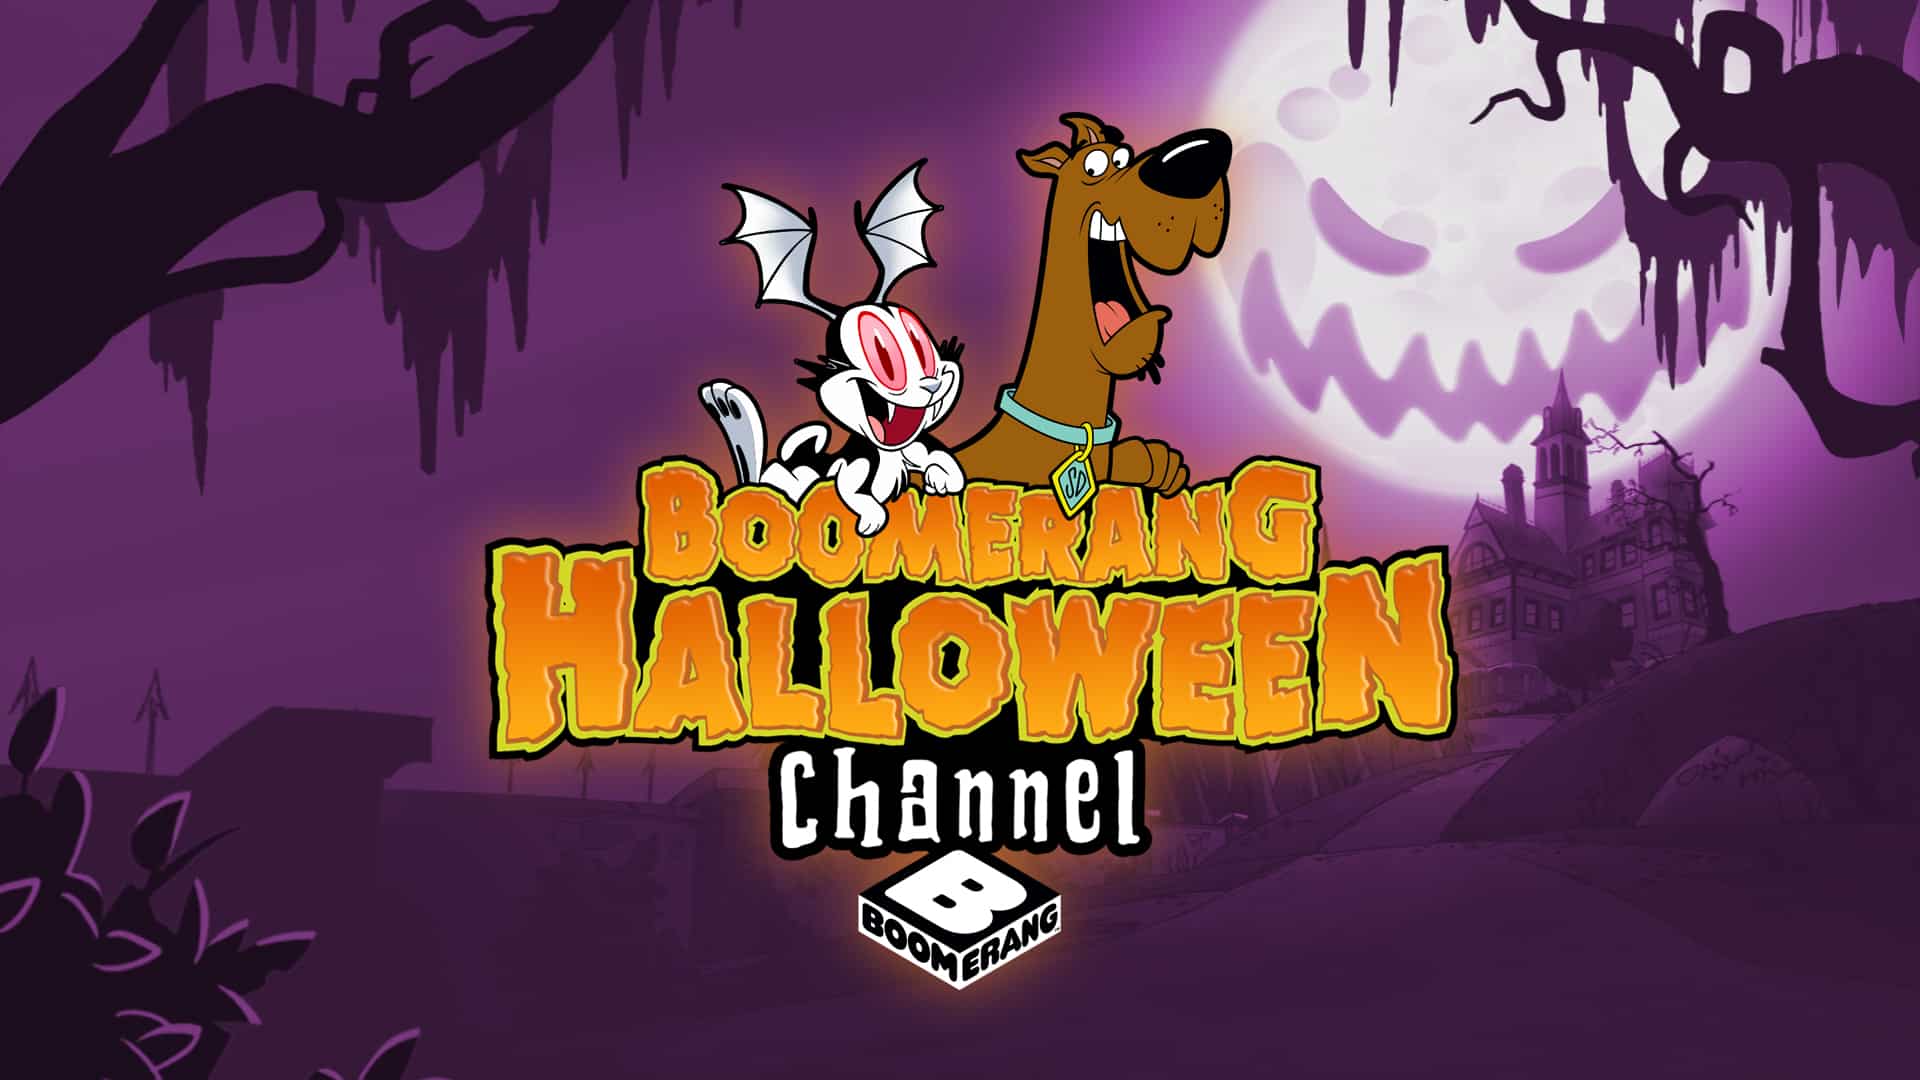 Il Boomerang Halloween Channel in arrivo dal 31 ottobre